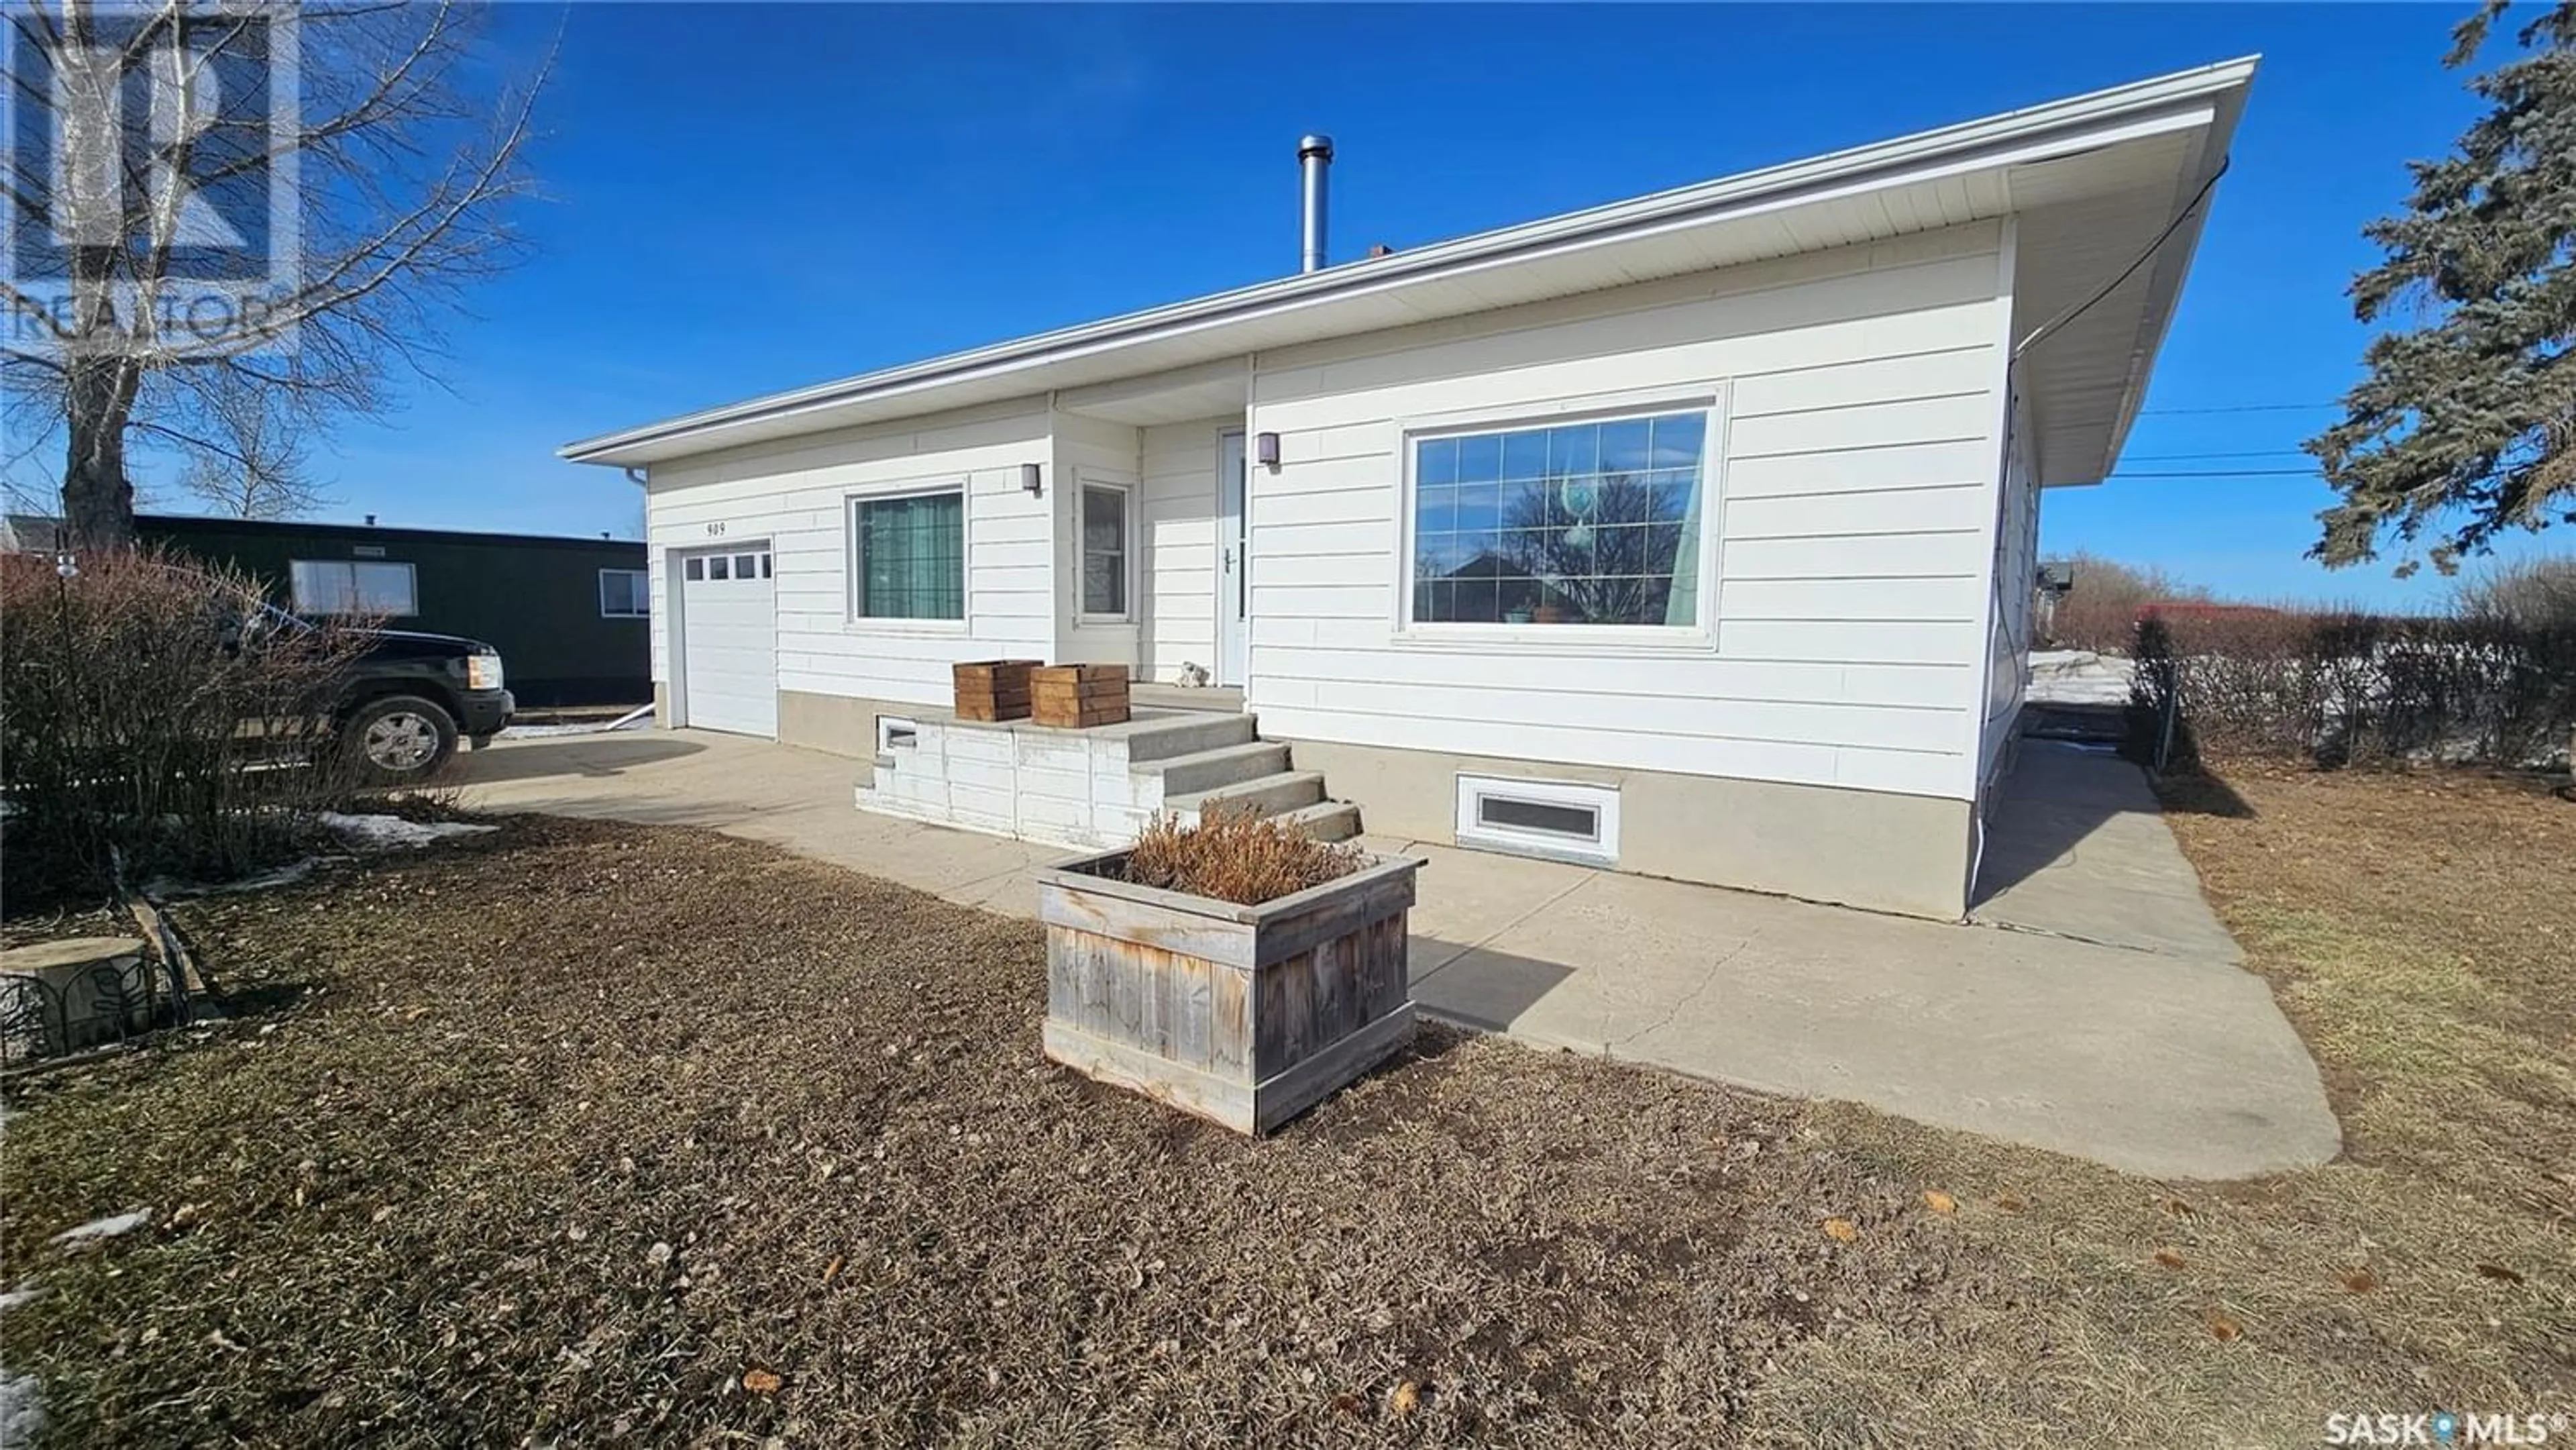 Home with vinyl exterior material for 909 1st STREET, Hanley Saskatchewan S0G2E0